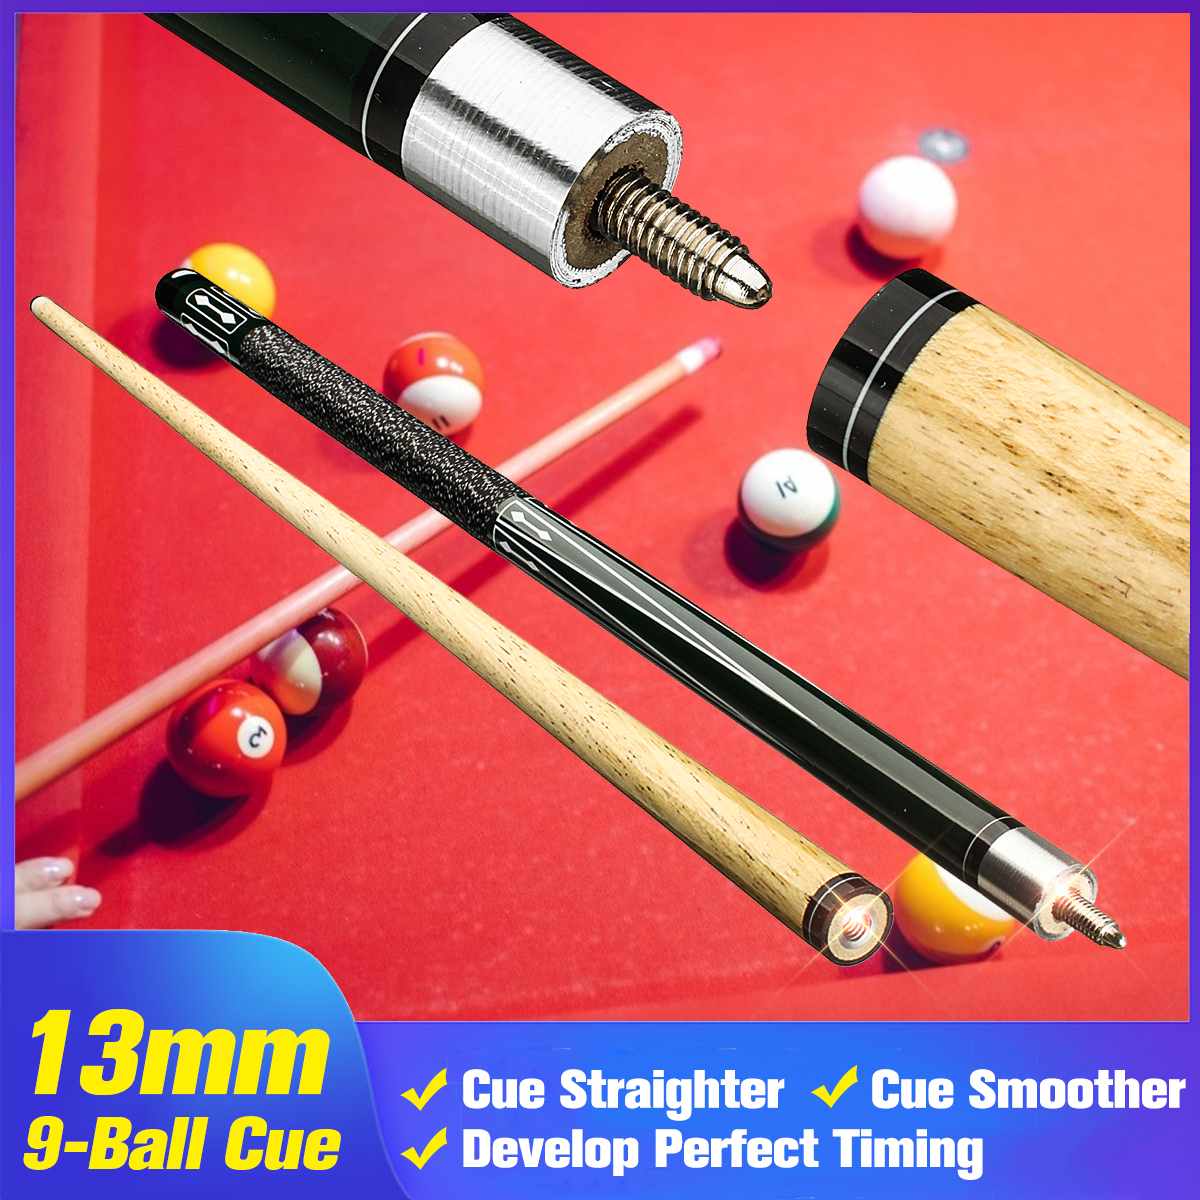 Wood 13mm 9-Ball Cue 1/2 Split Billiard Cues Straighter Smoother Snoer Billiard Pool Cue Stick Billiards Exercising Tool 145cm